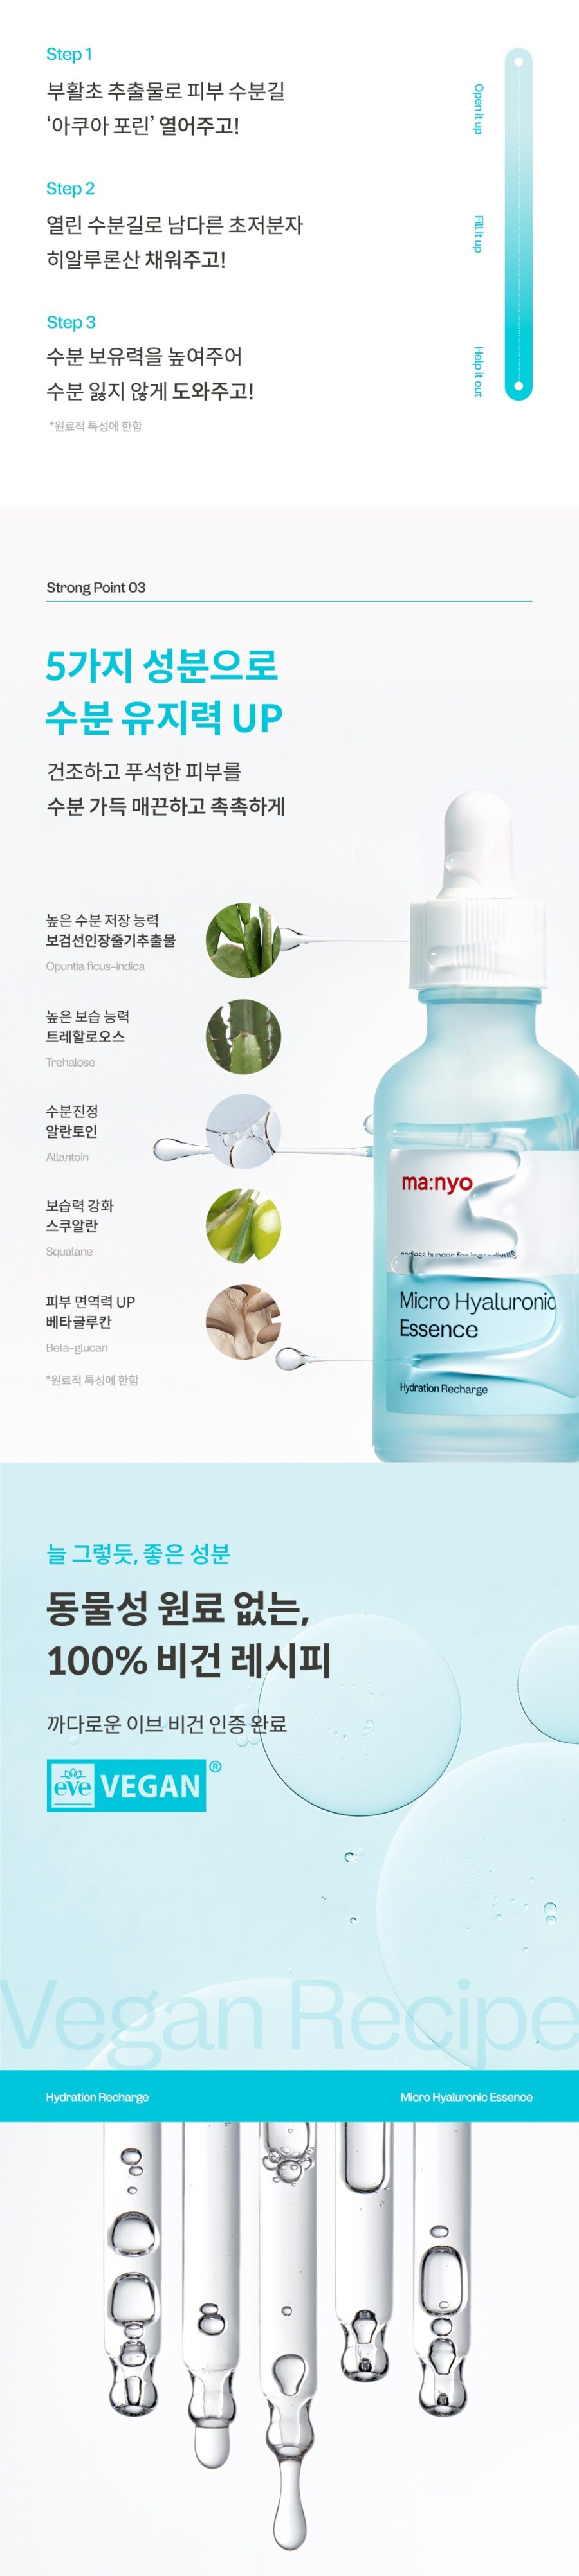 Manyo Factory Micro Hyaluronic Essence korean skincare product online shop malaysia macau poland4